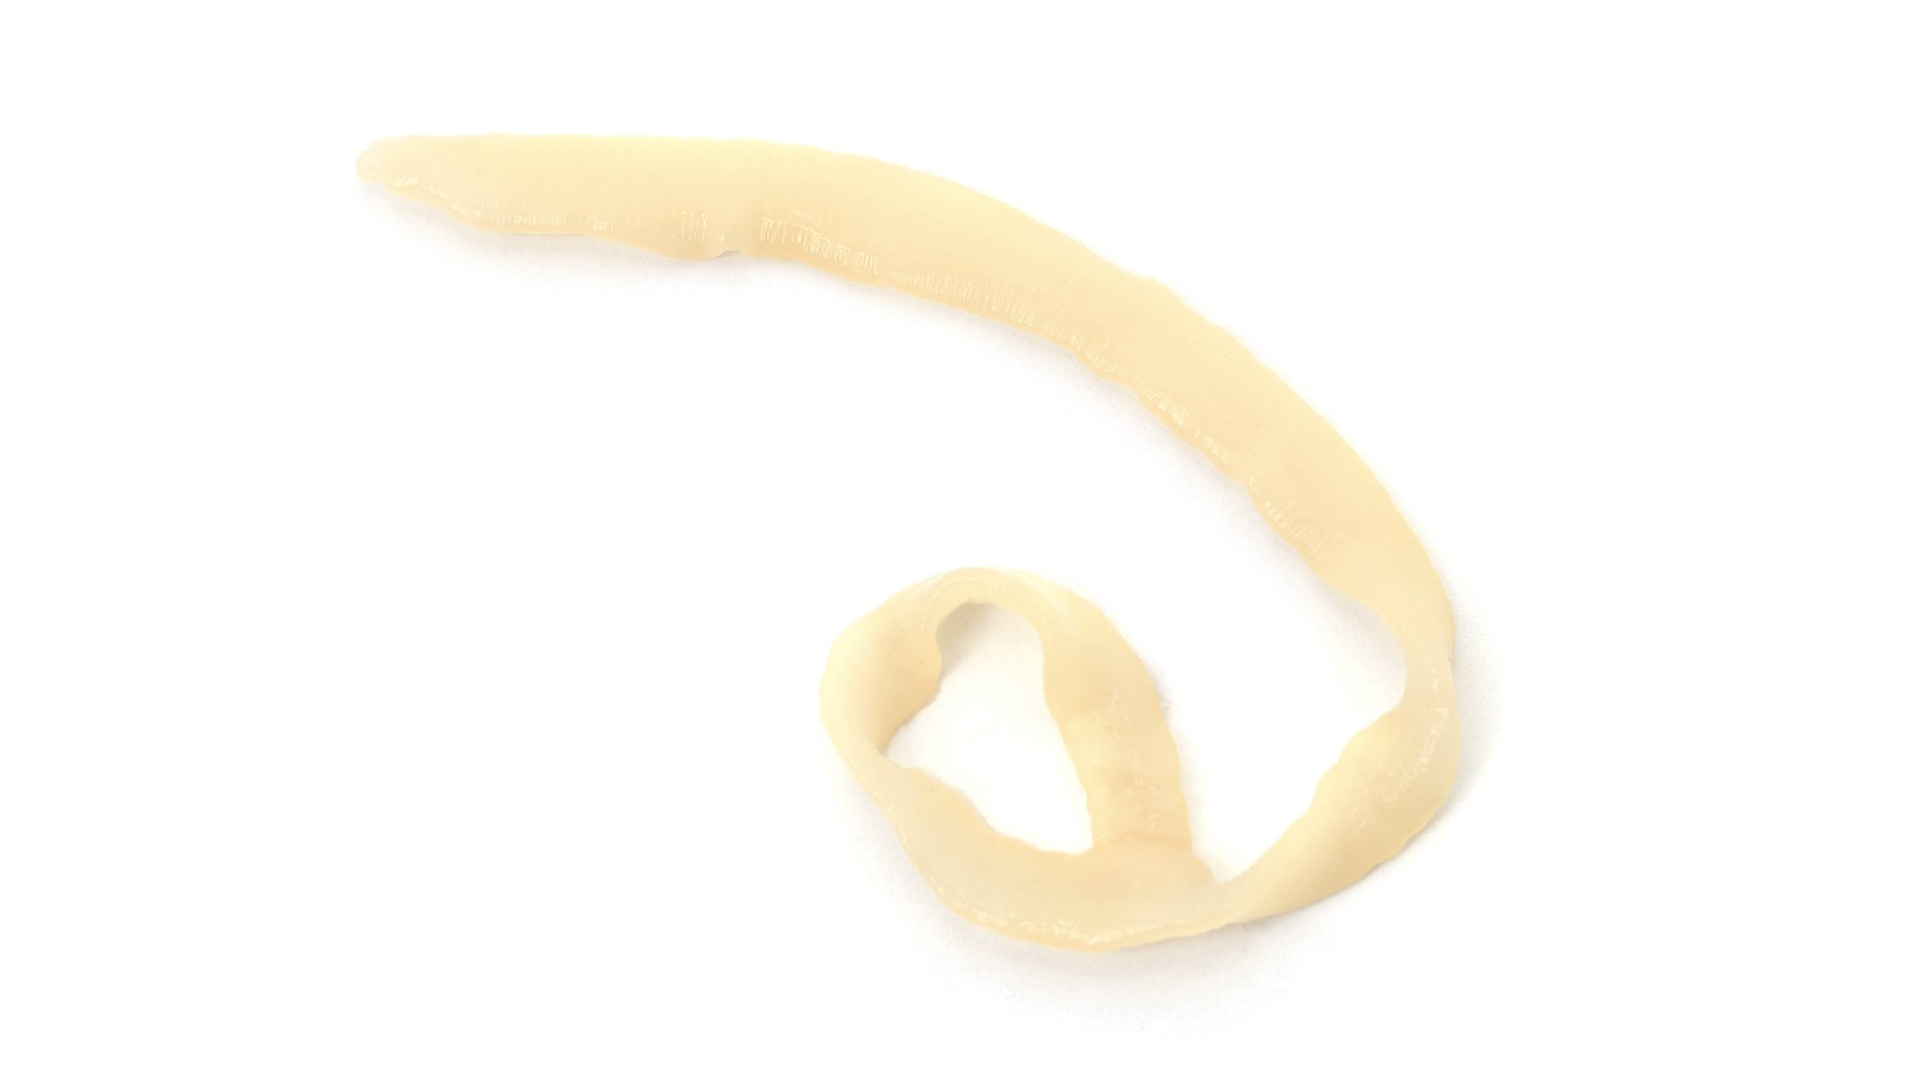 An image of the tapeworm Diphyllobothrium latum.